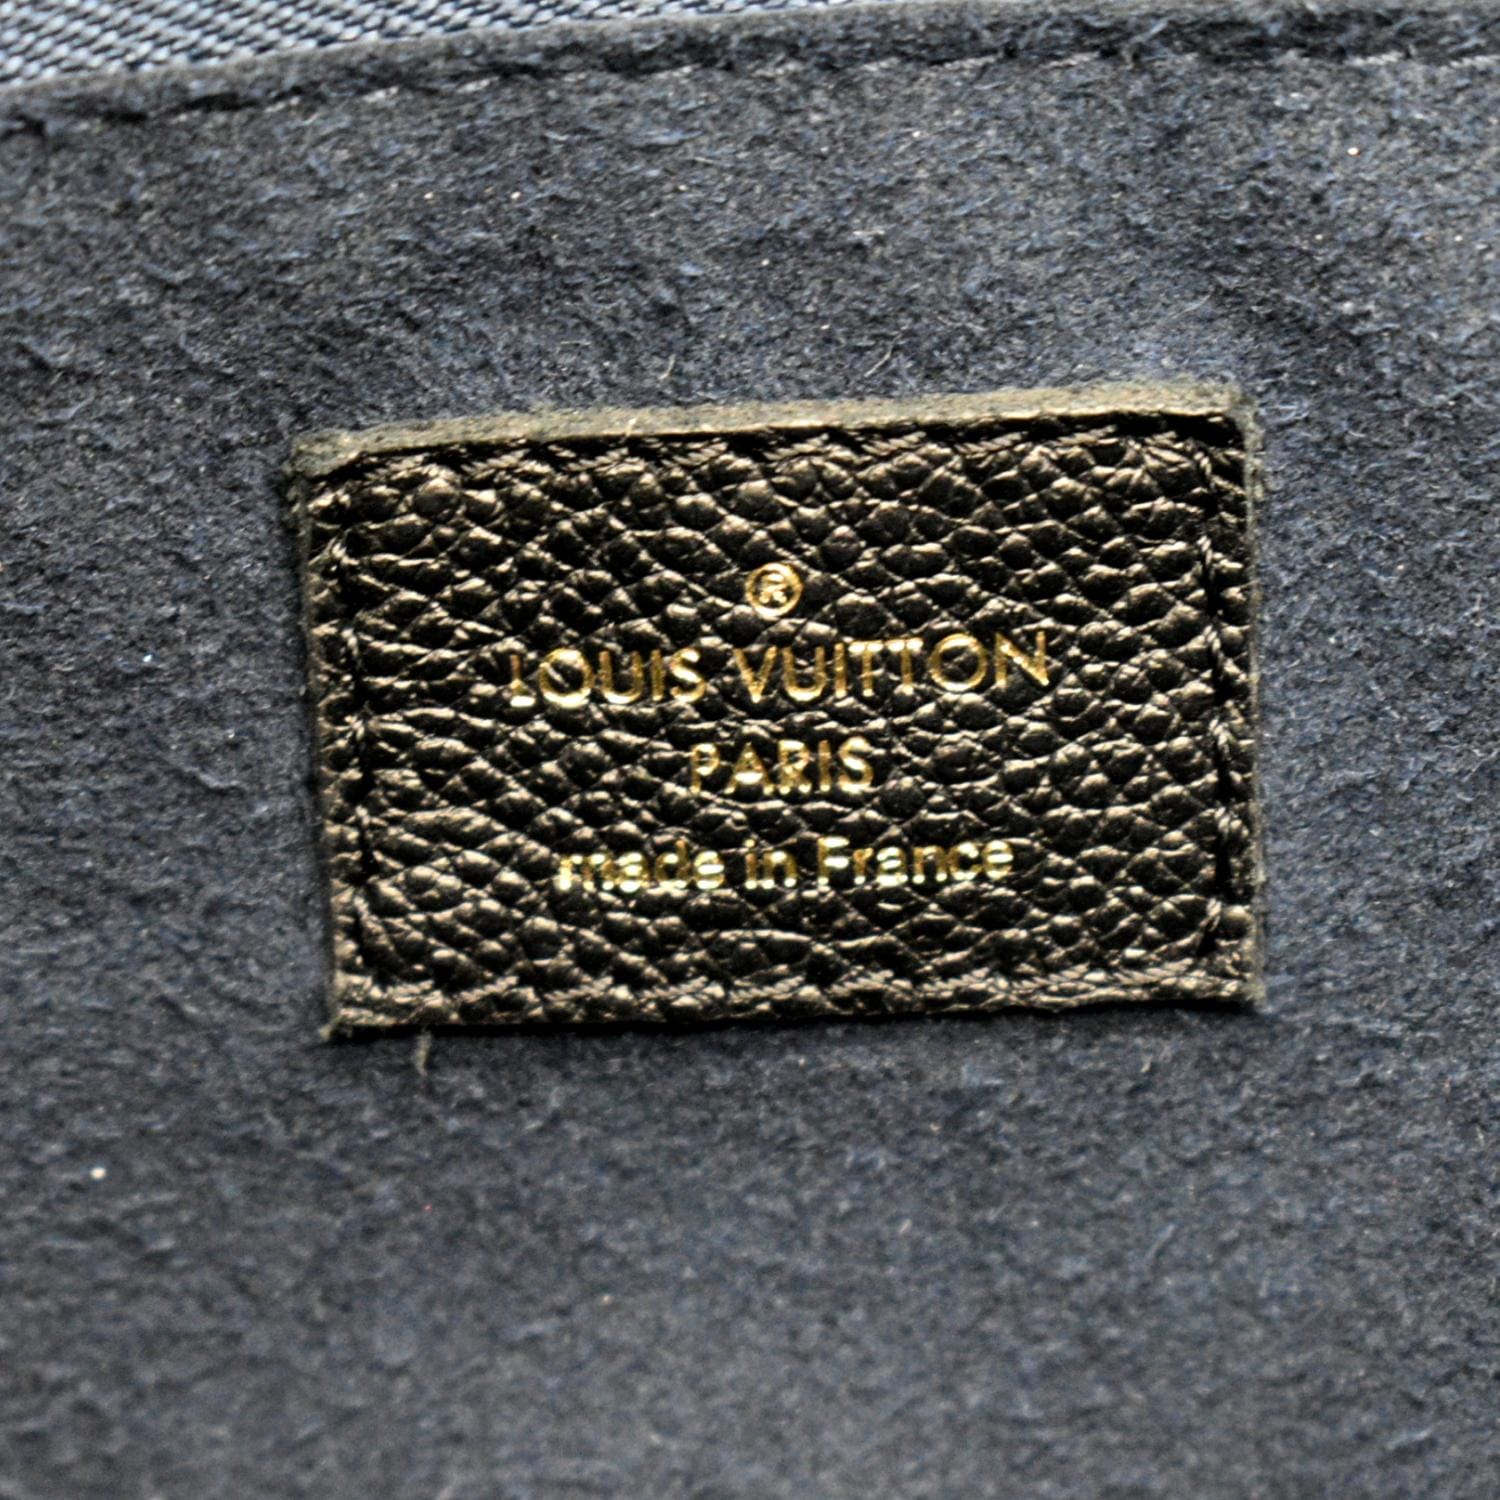 Louis Vuitton M45685 NEVERFULL MM Black